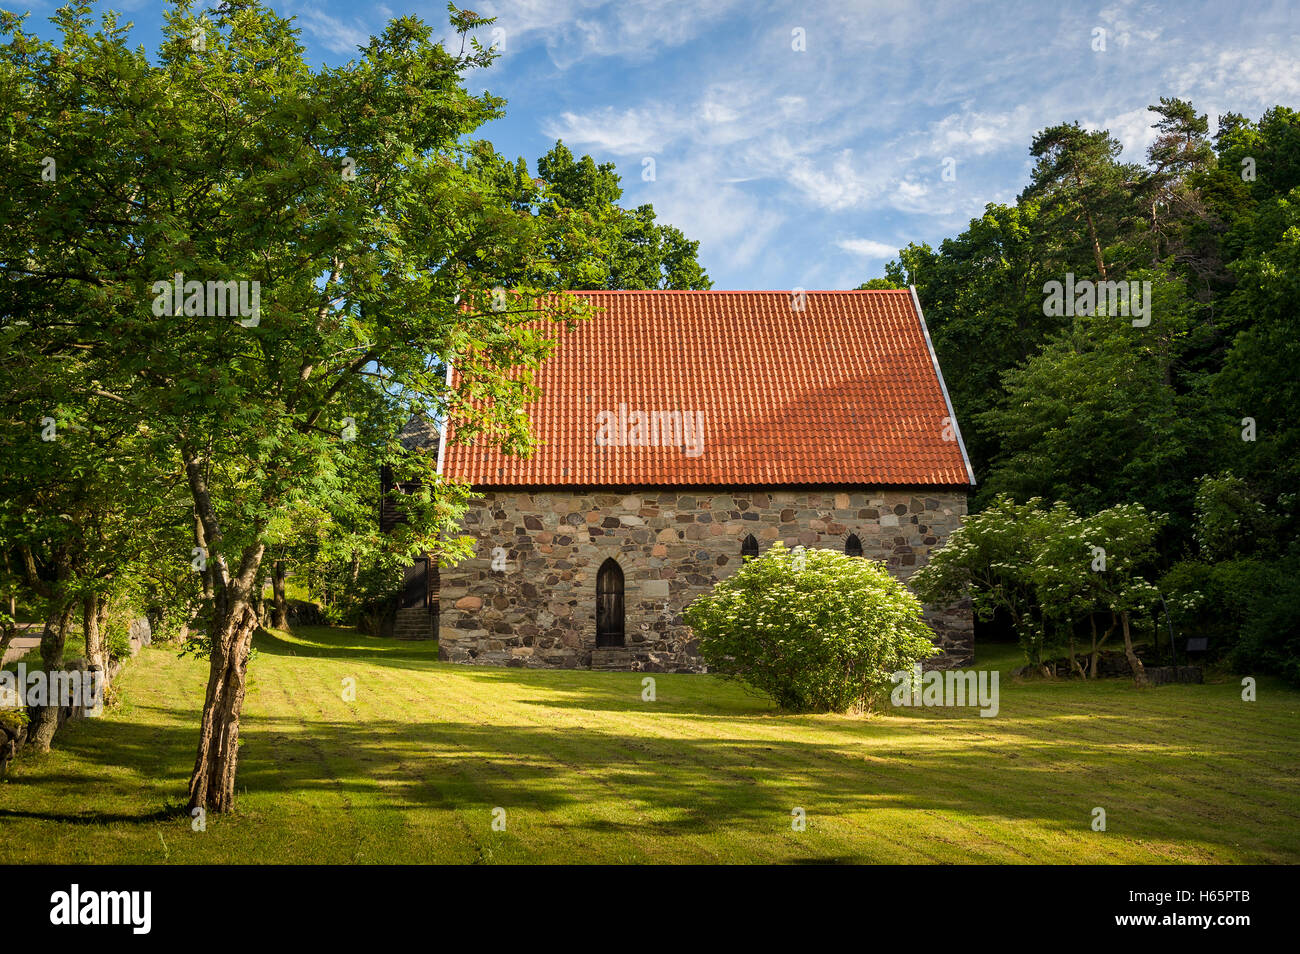 Lovoy kapell - cappella medievale in Norvegia village Foto Stock